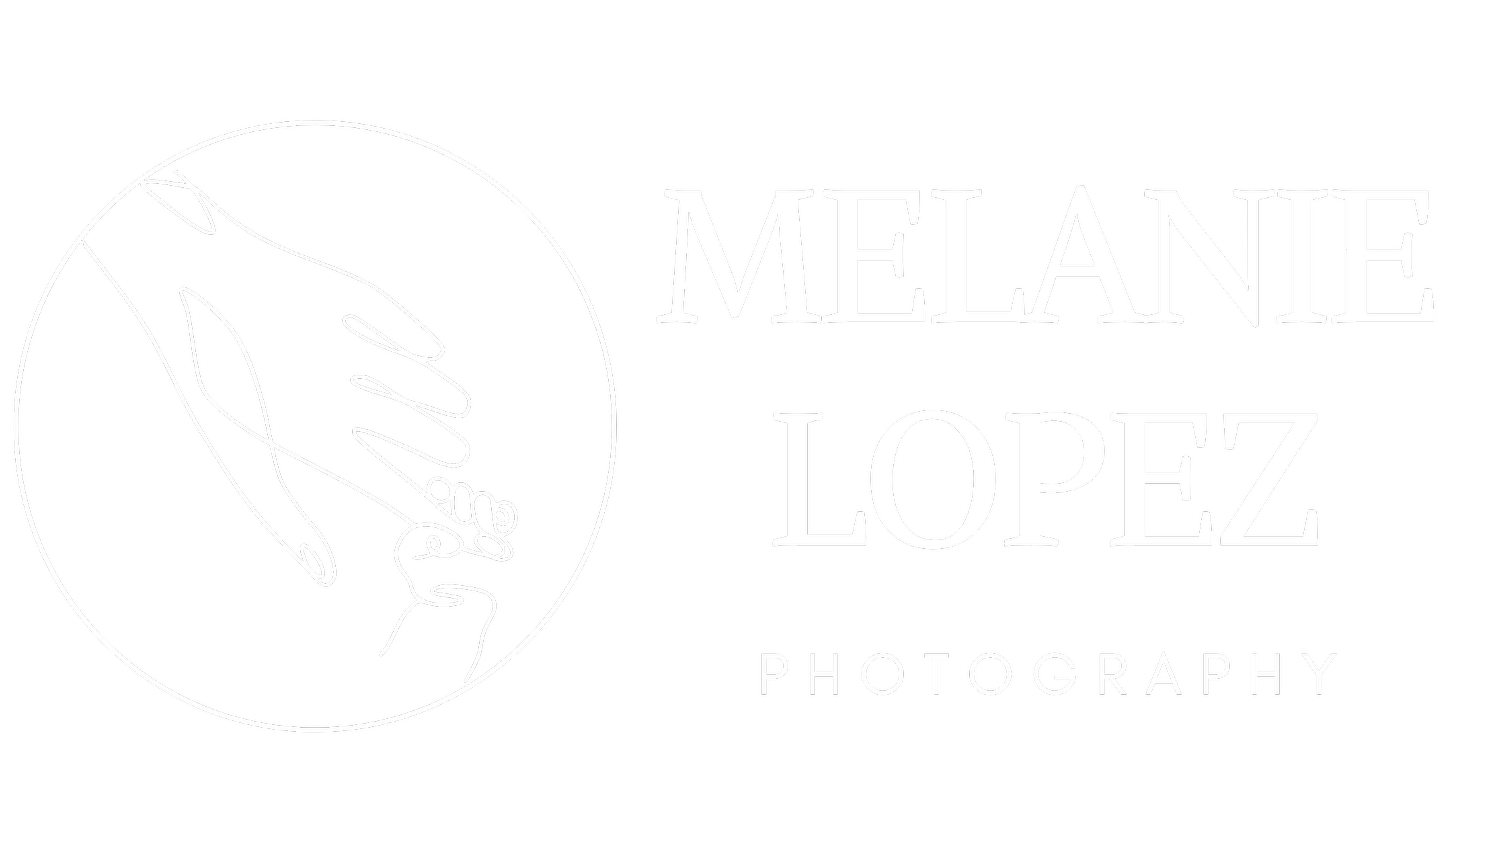 MELANIE LOPEZ PHOTOGRAPHY